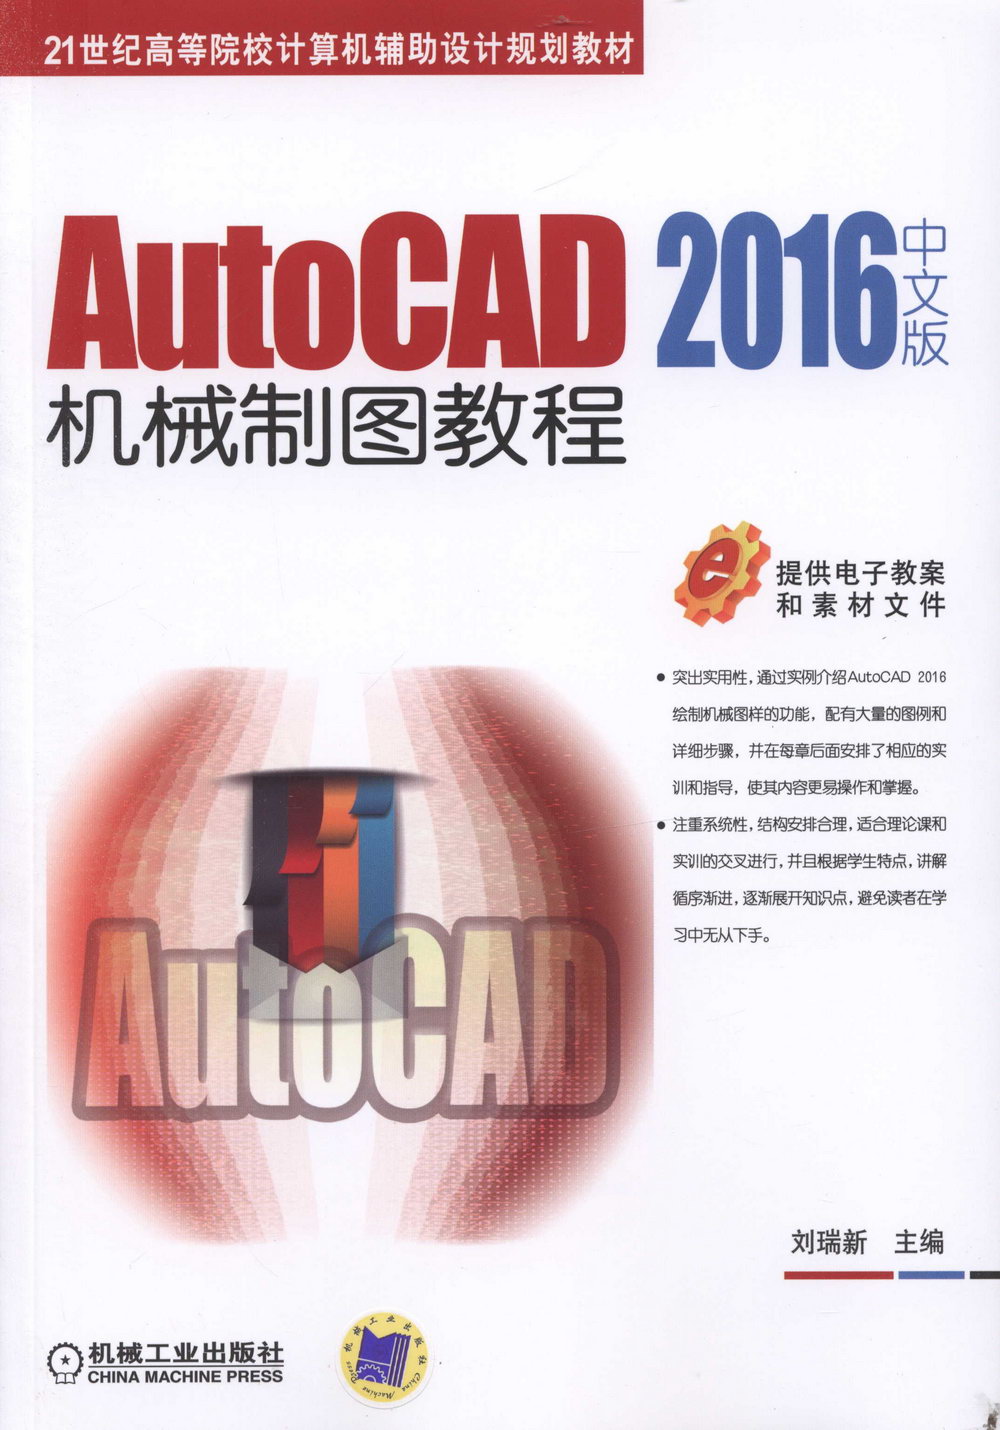 AutoCAD 2016中文版機械制圖教程